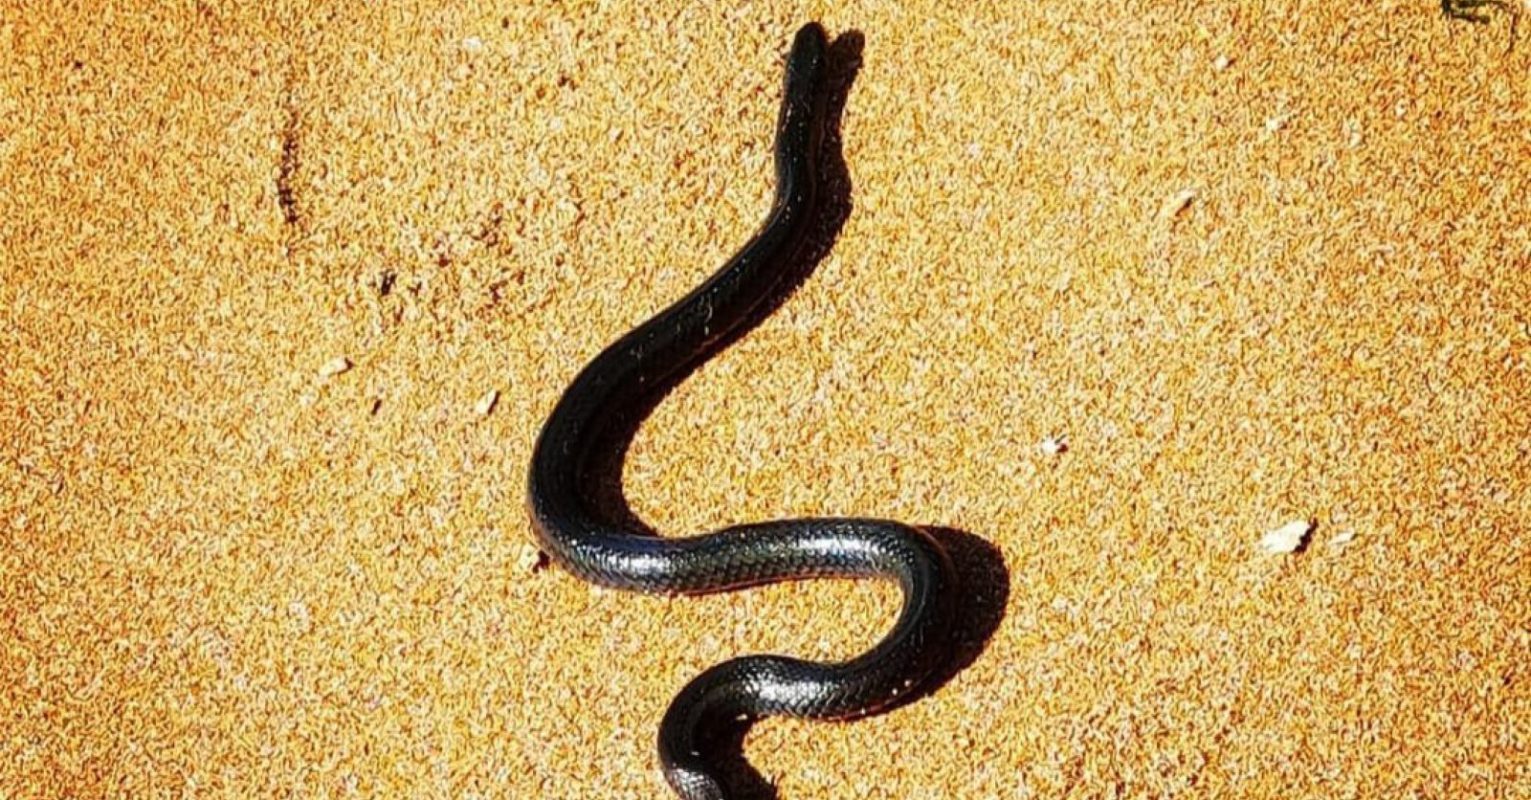 A cobra